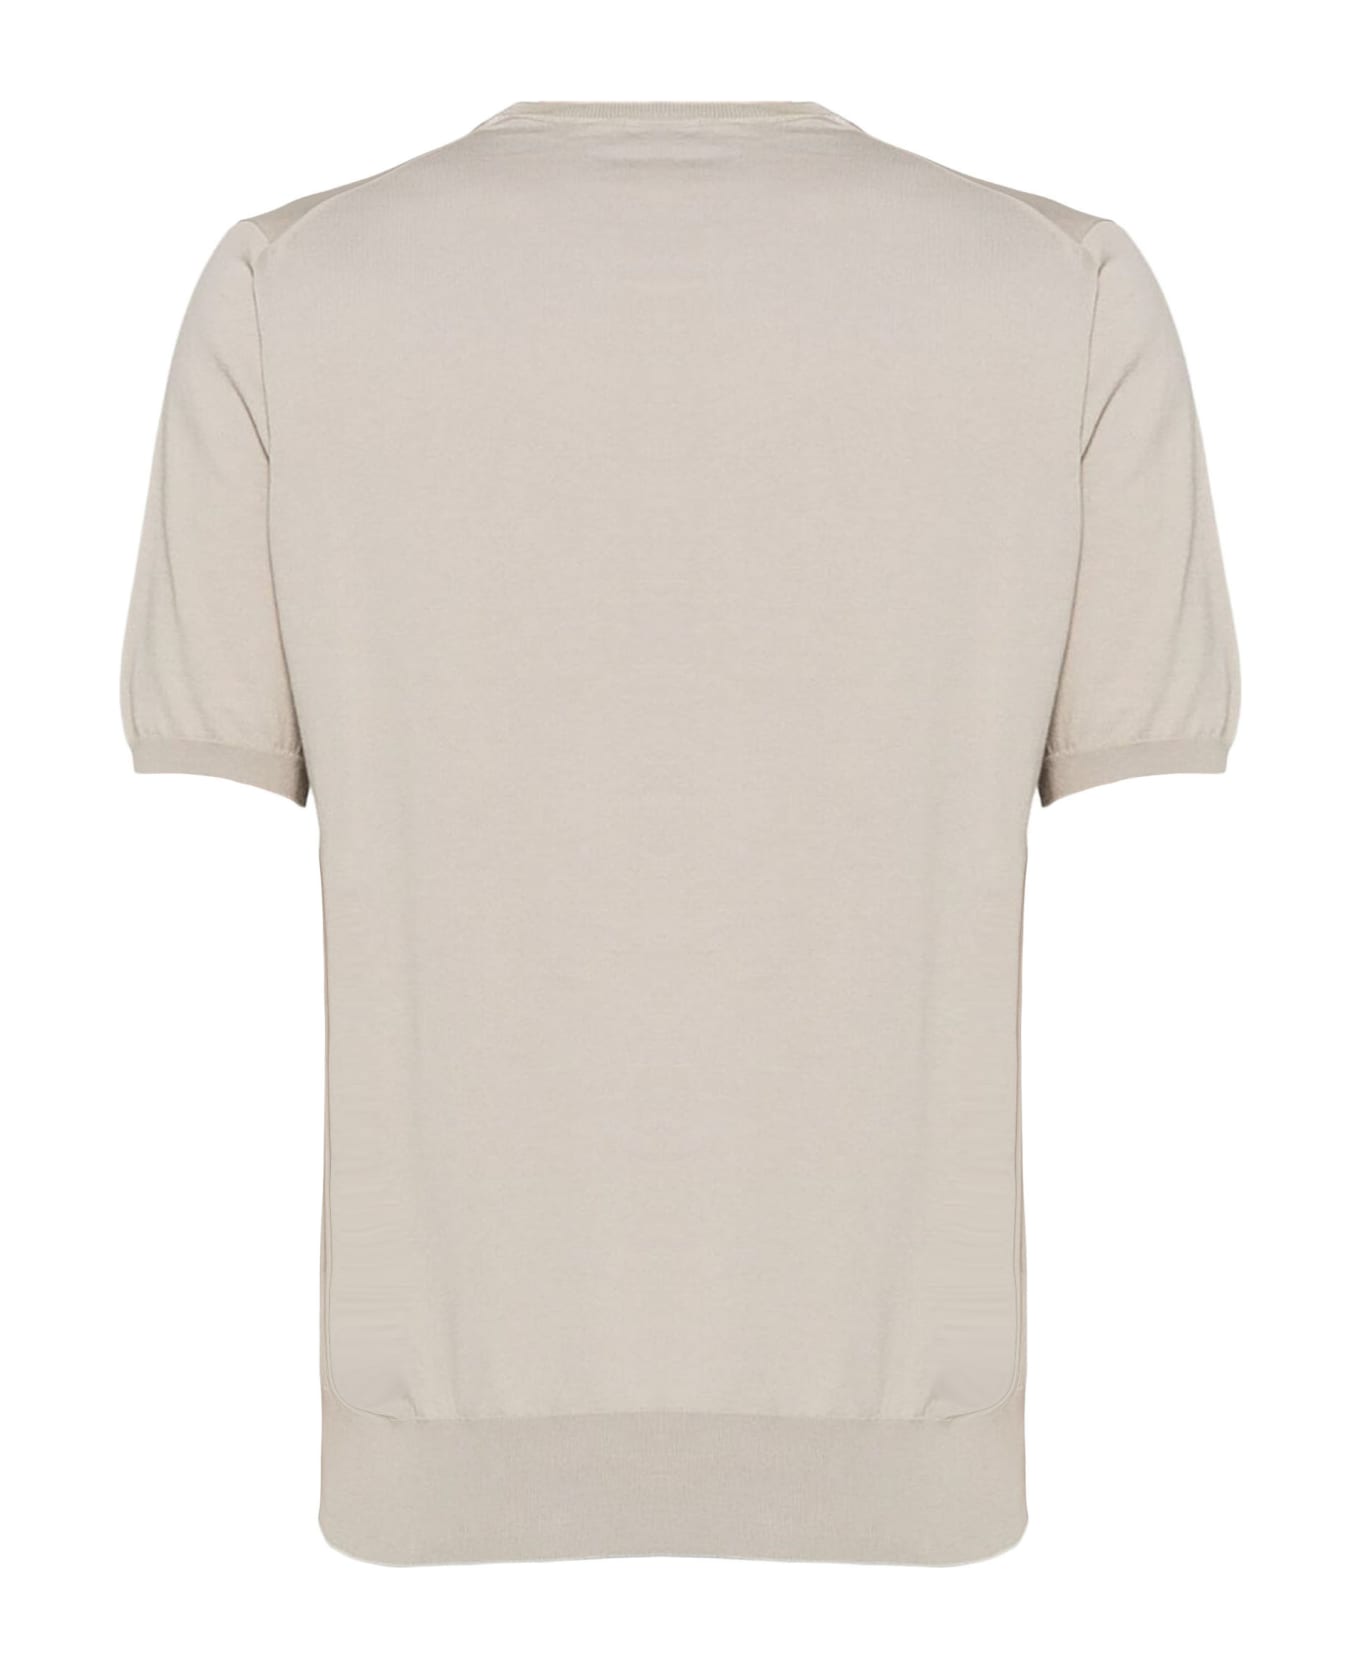 Cruciani Beige Cotton T-shirt - Beige